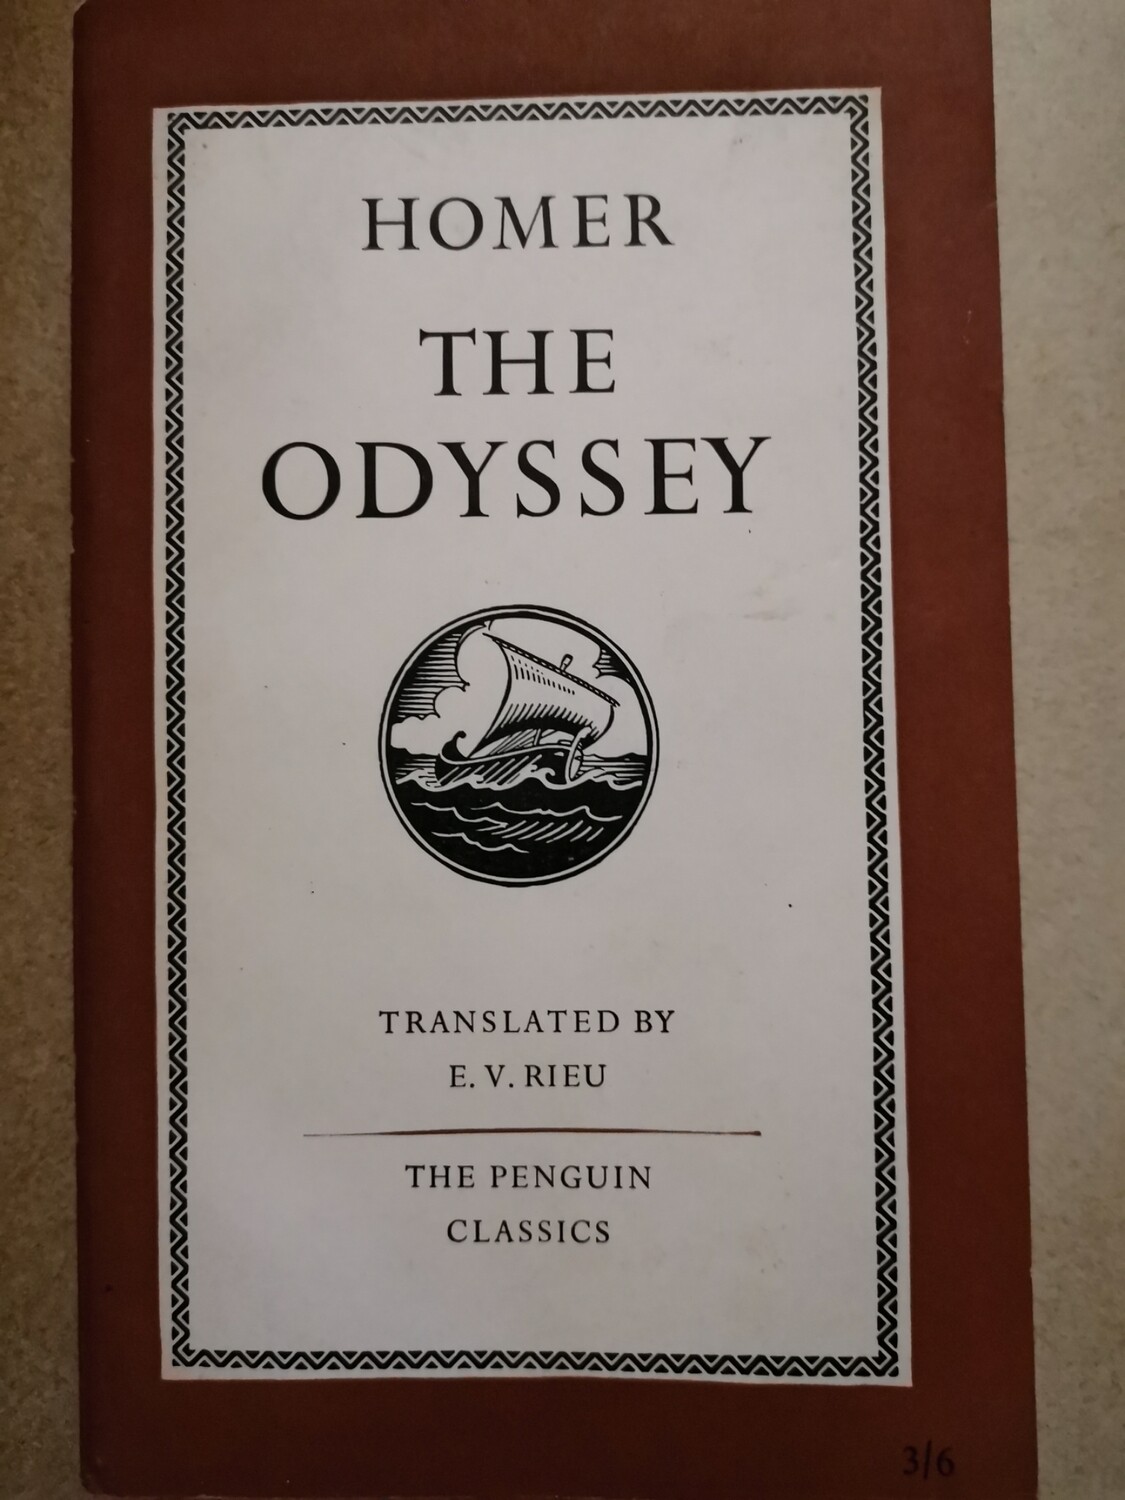 Homer the Odyssey, Translated by E. V. Rieu